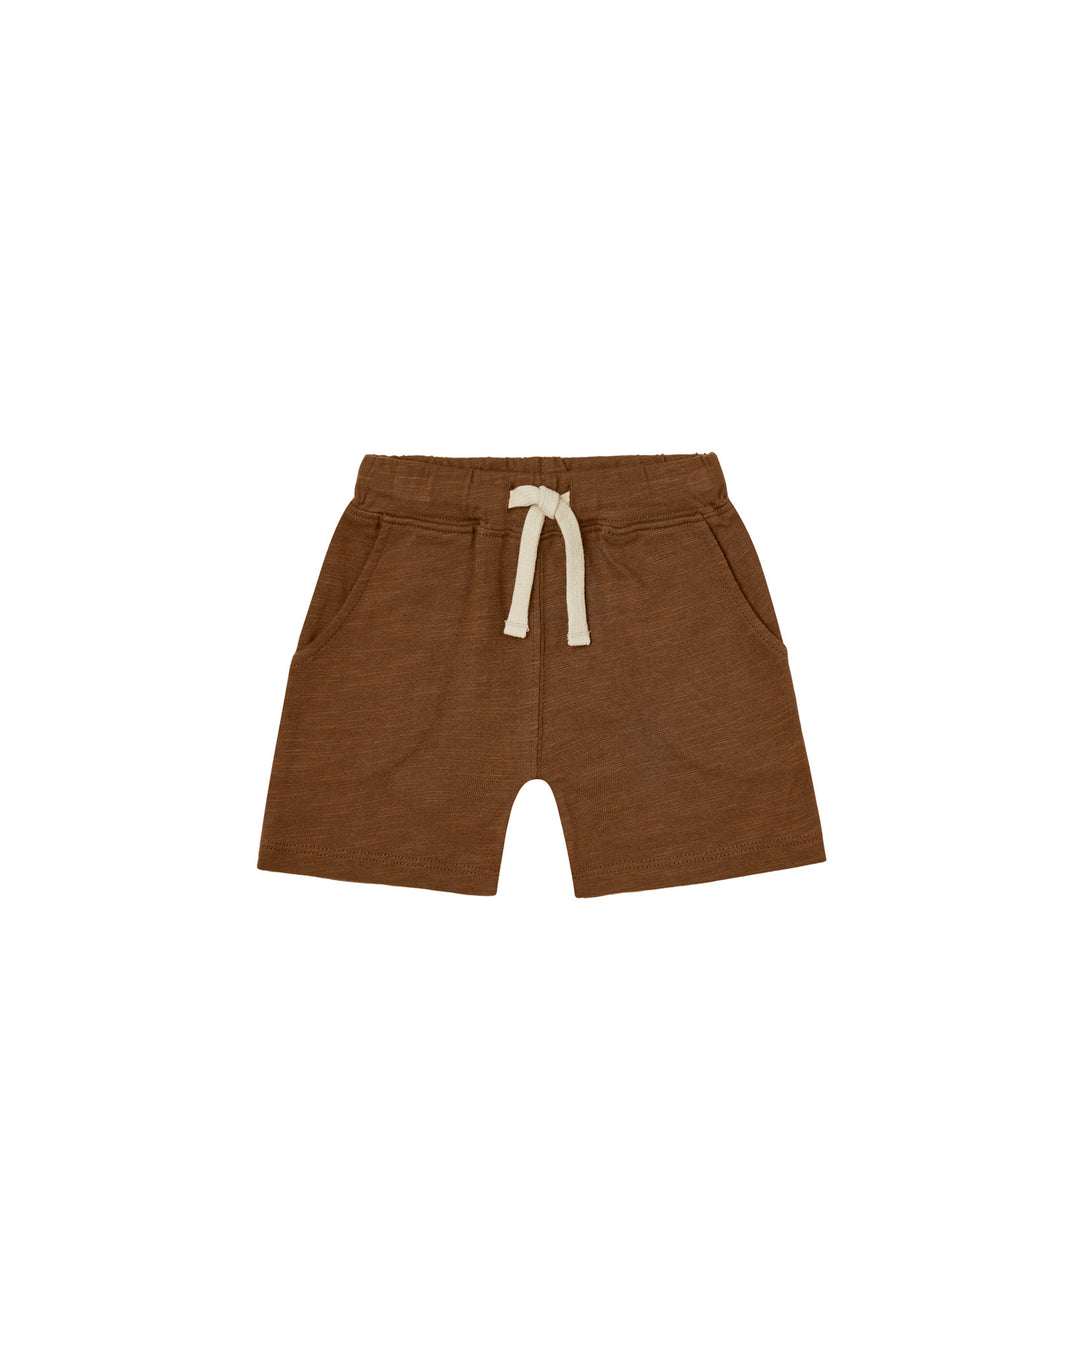 Chocolate Sam Shorts by Rylee + Cru